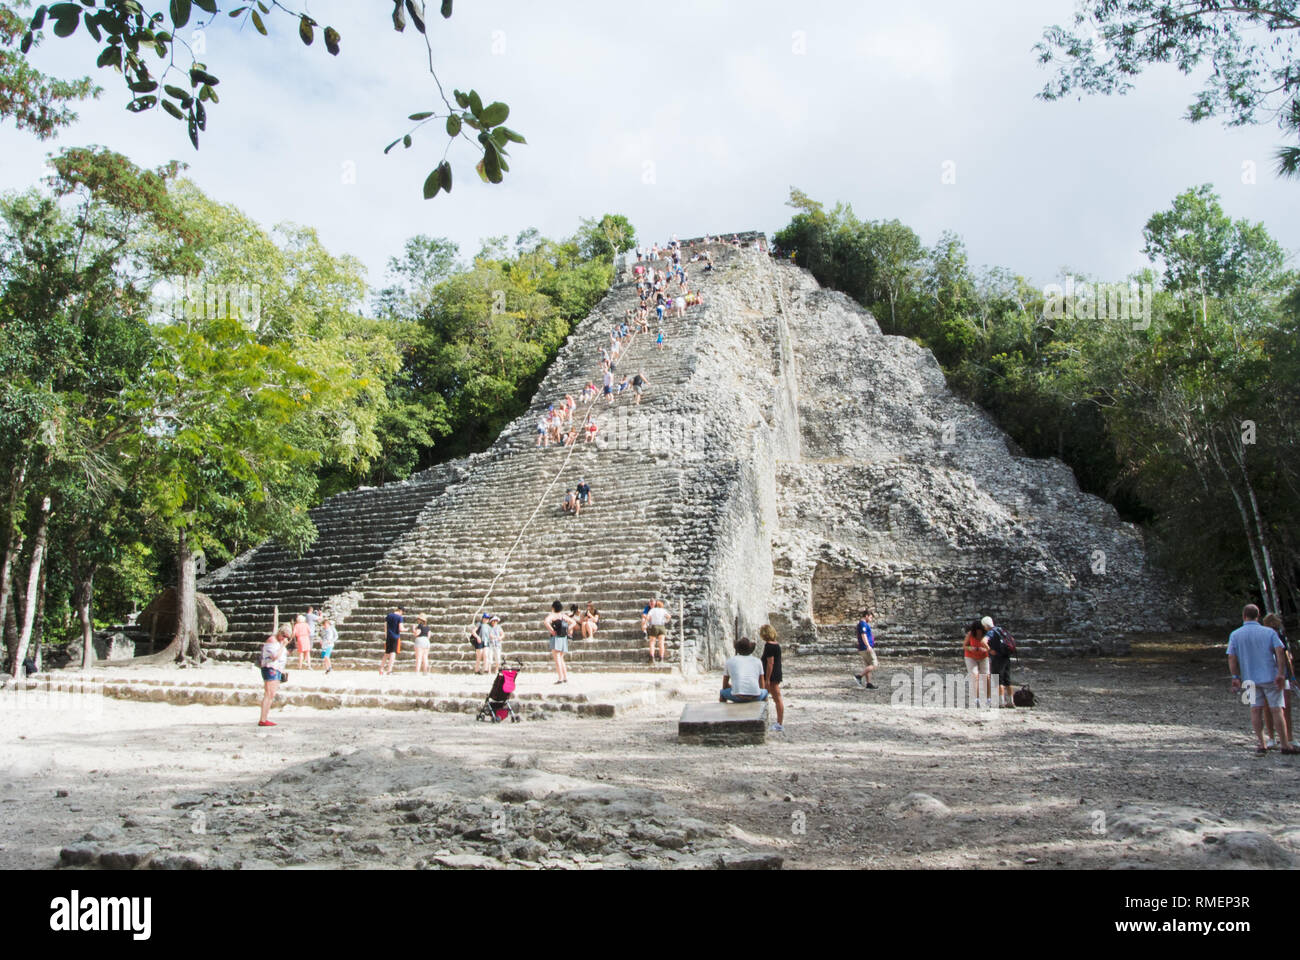 Climbing Ixmoja, the temple pyramid of Coba, Mexico Stock Photo